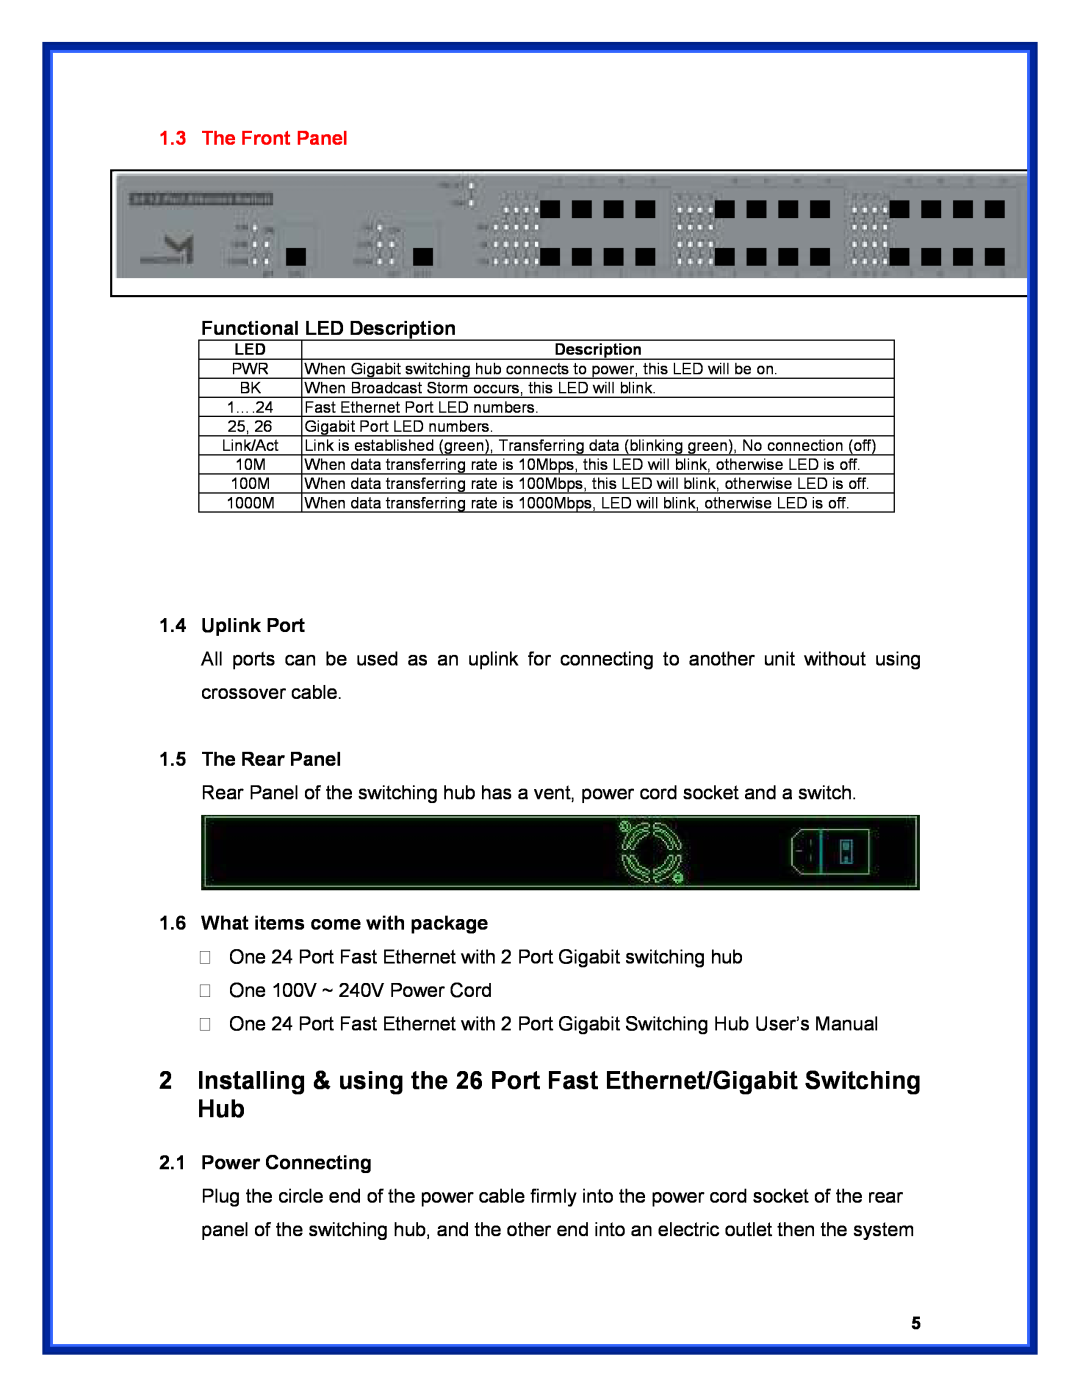 Advantek Networks ANS-2402G user manual Installing & using the 26 Port Fast Ethernet/Gigabit Switching Hub, The Front Panel 